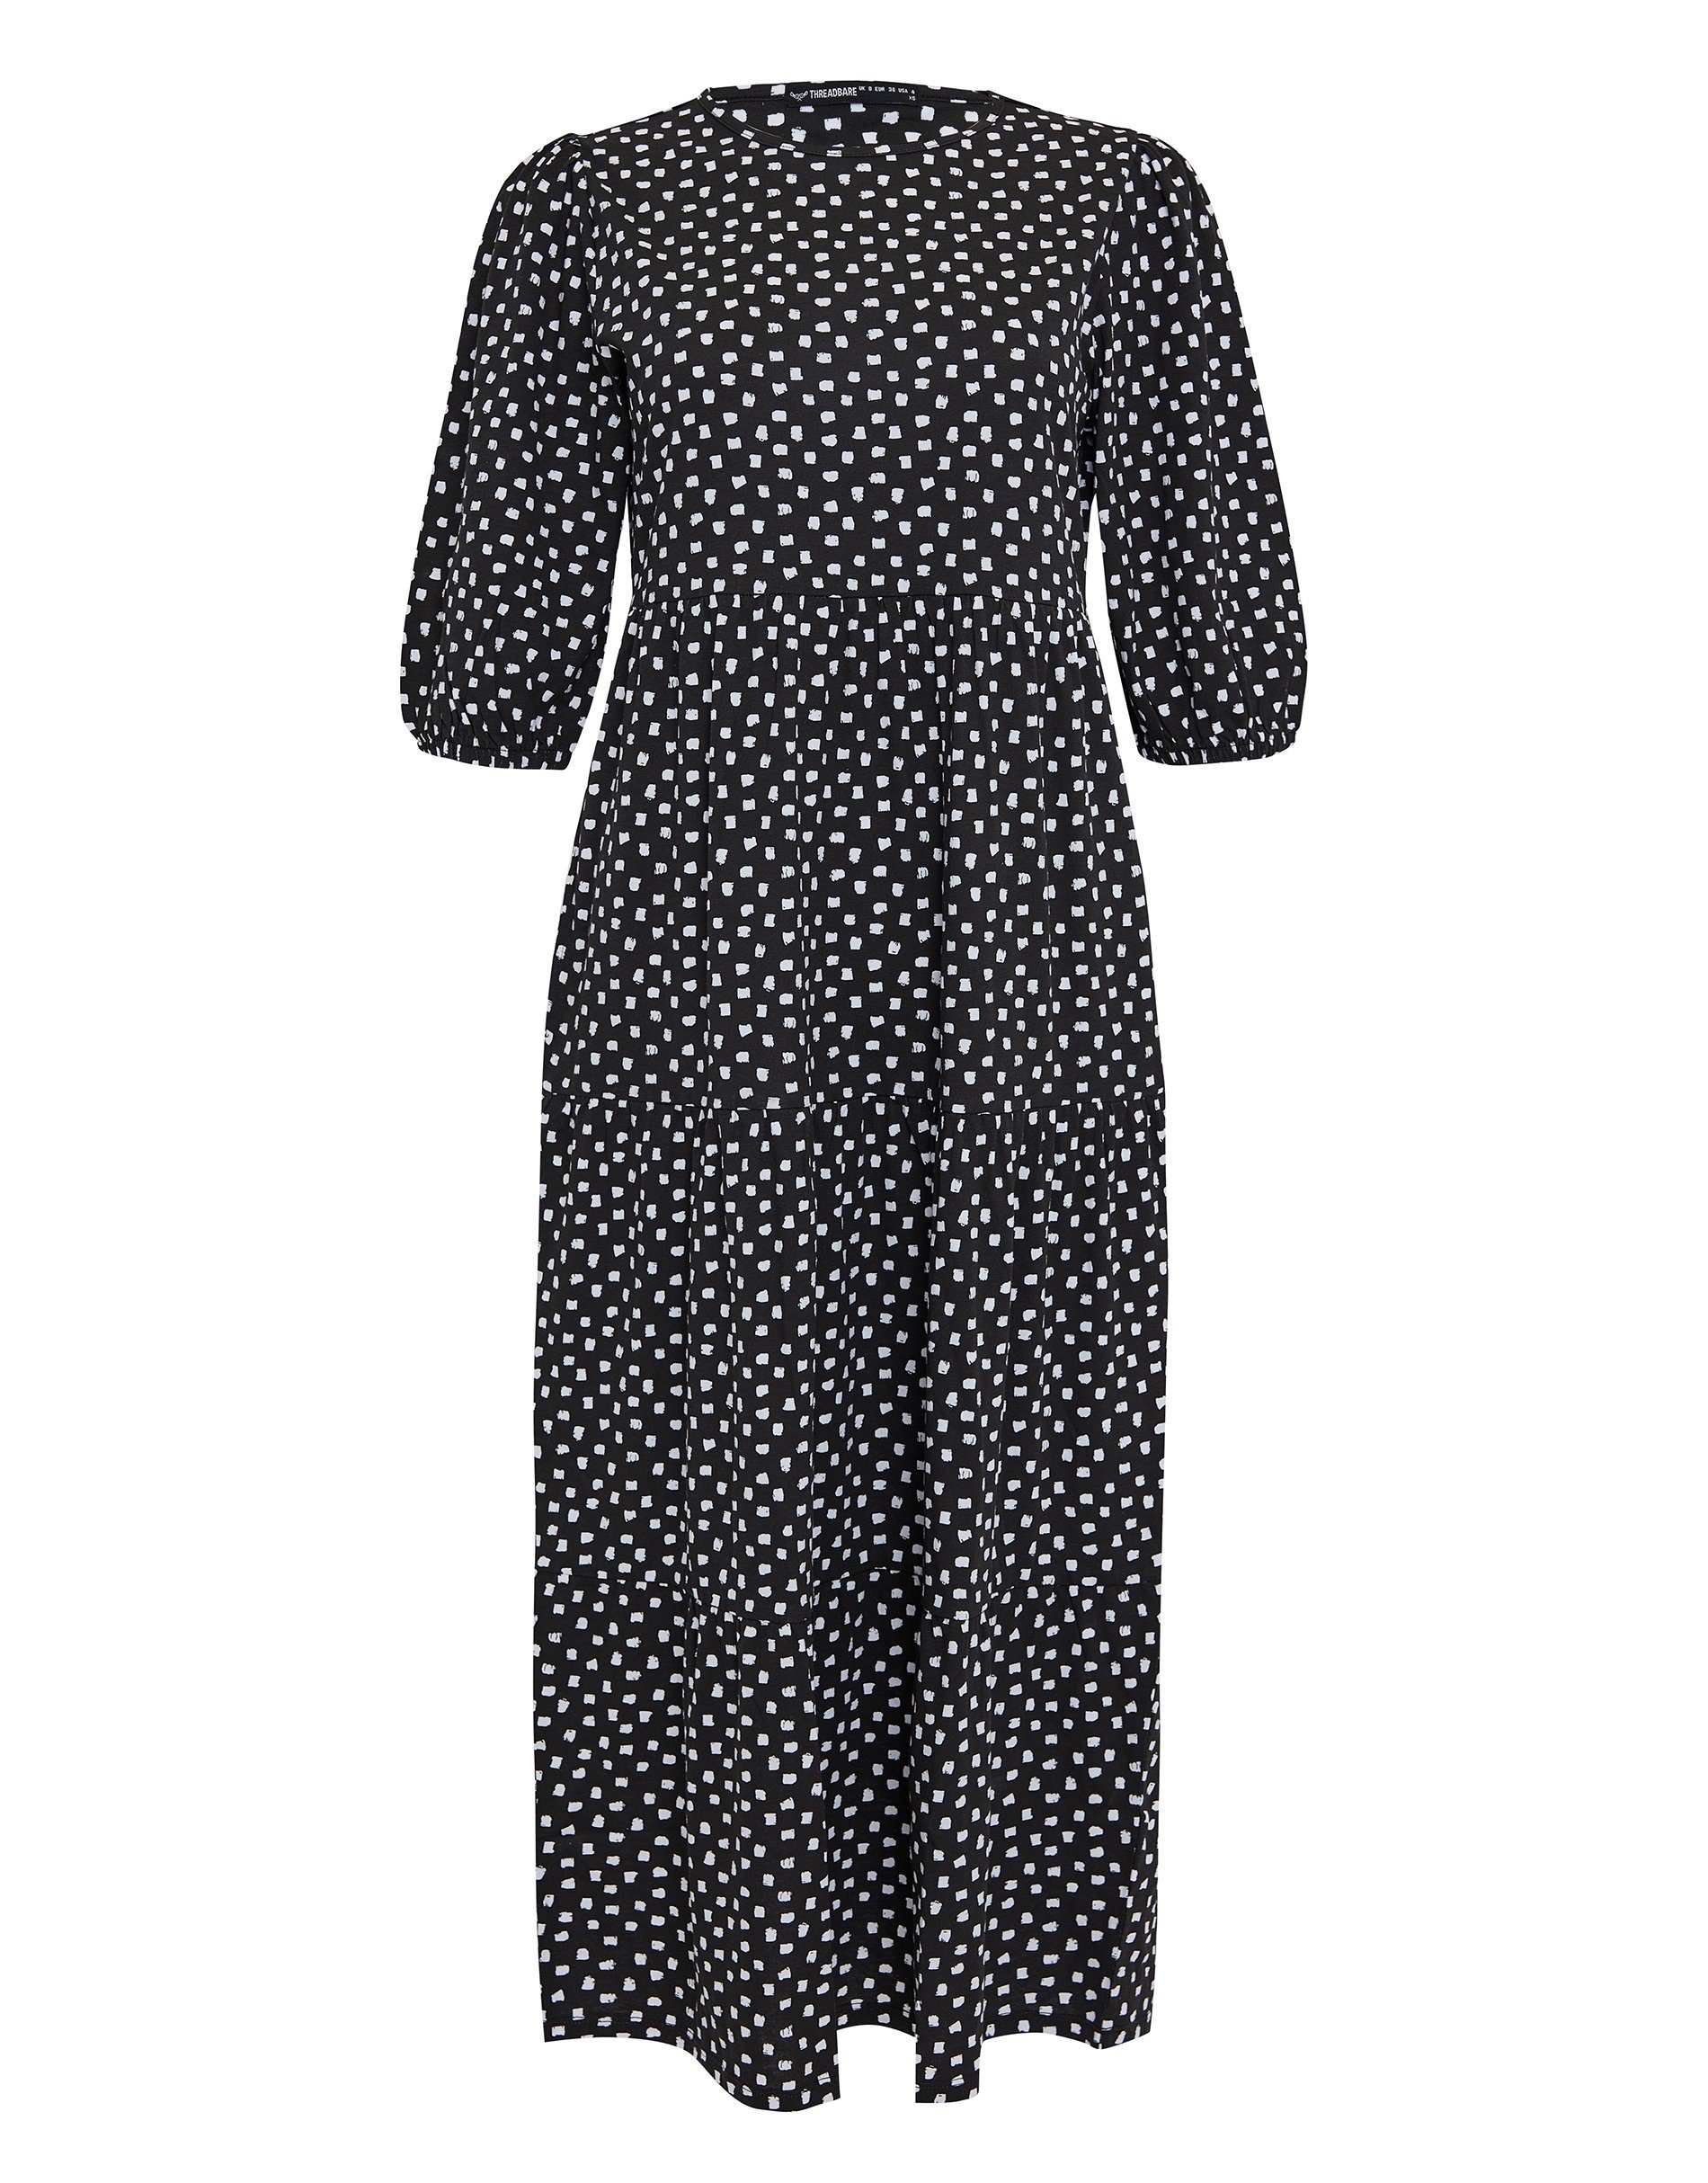 Tiered Finn Dress THB Black Midi gepunktet Sommerkleid Dot - Threadbare schwarz